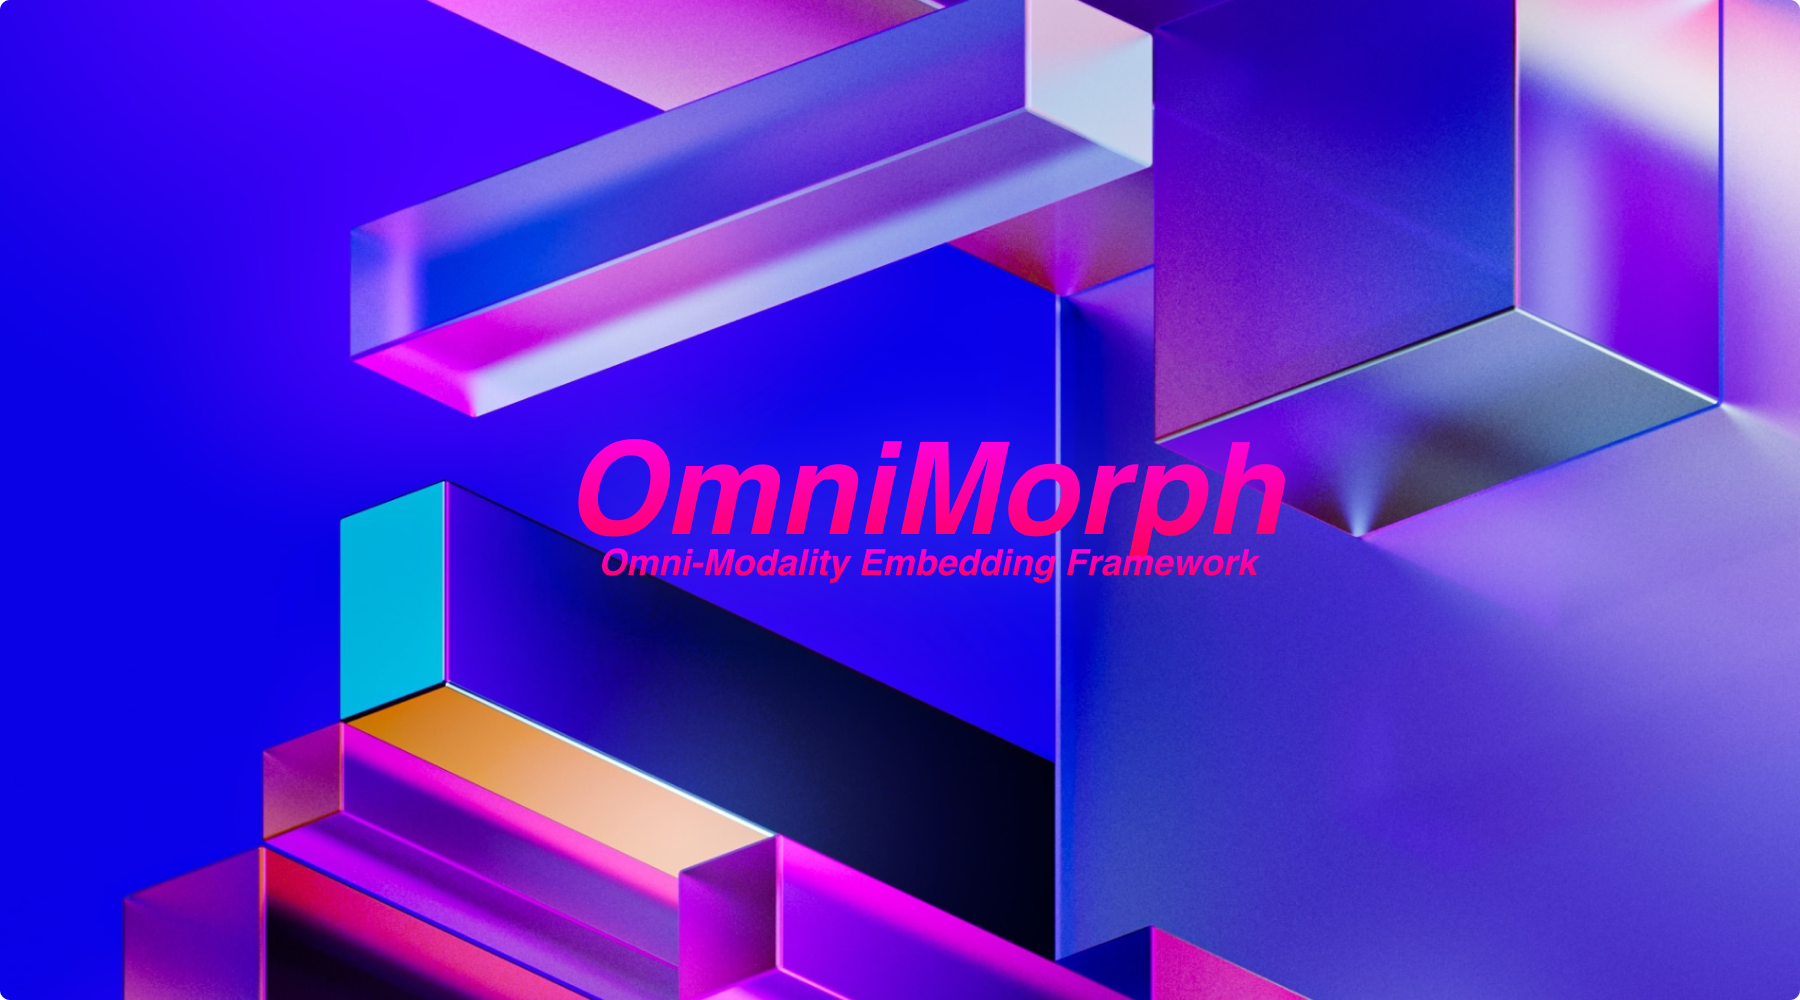 OmniMorph by Agora